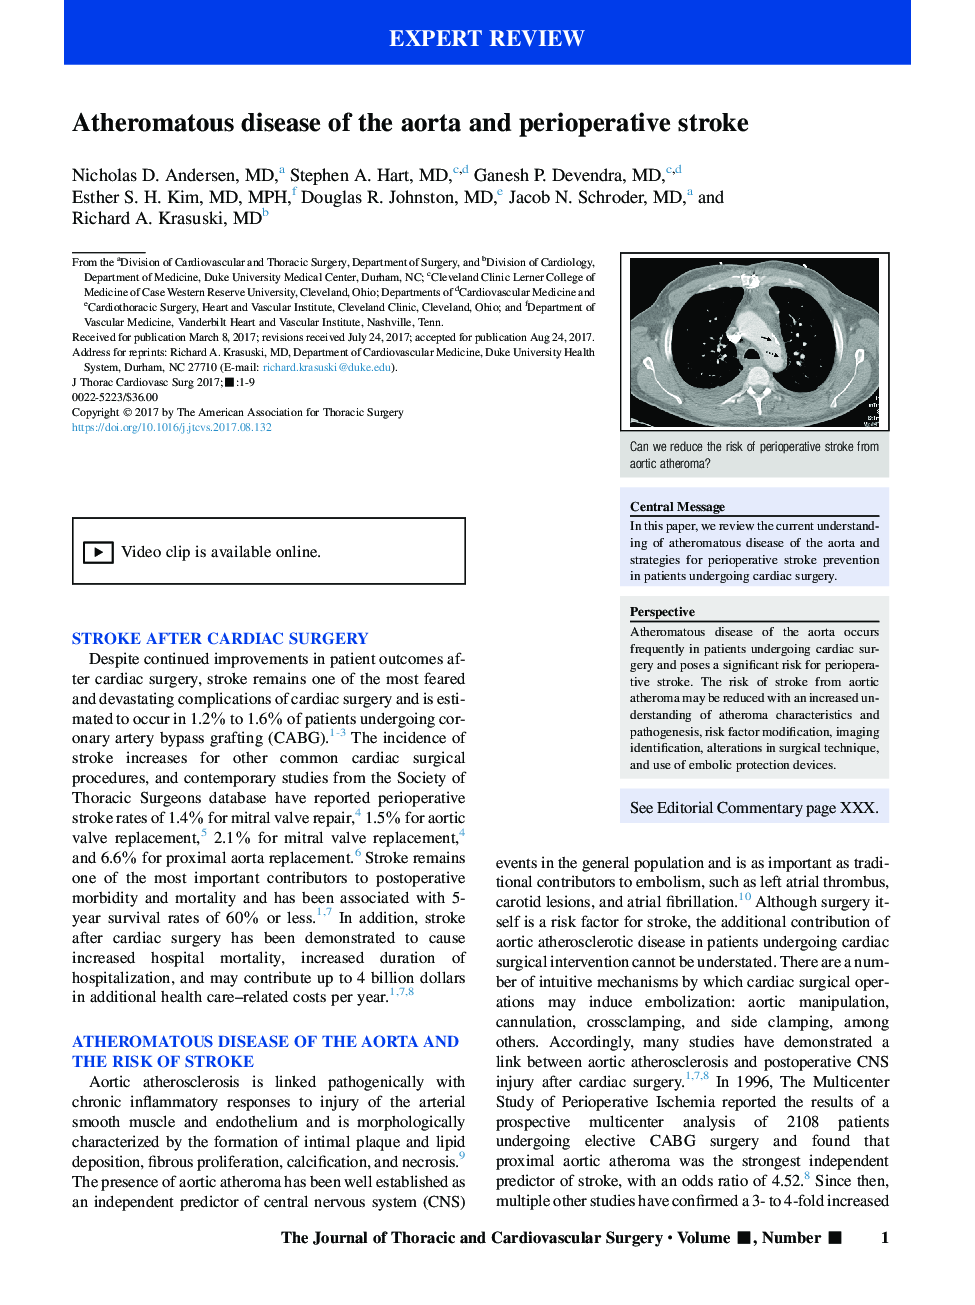 Atheromatous disease of the aorta and perioperative stroke